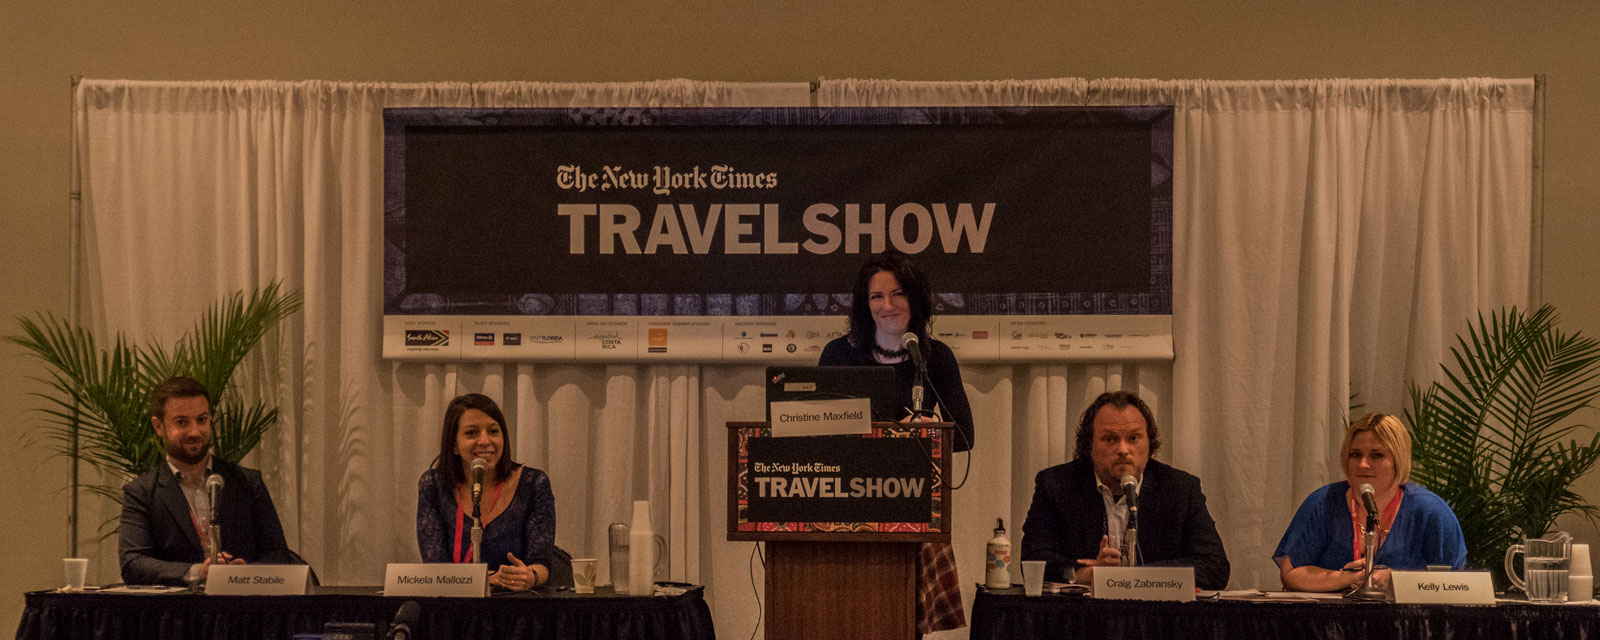 Mickela Mallozzi Christine Maxfield Kelly Lewis Craig Zabransky Matt Stabile Top Places to Travel Alone in 2017 New York Times Travel Show